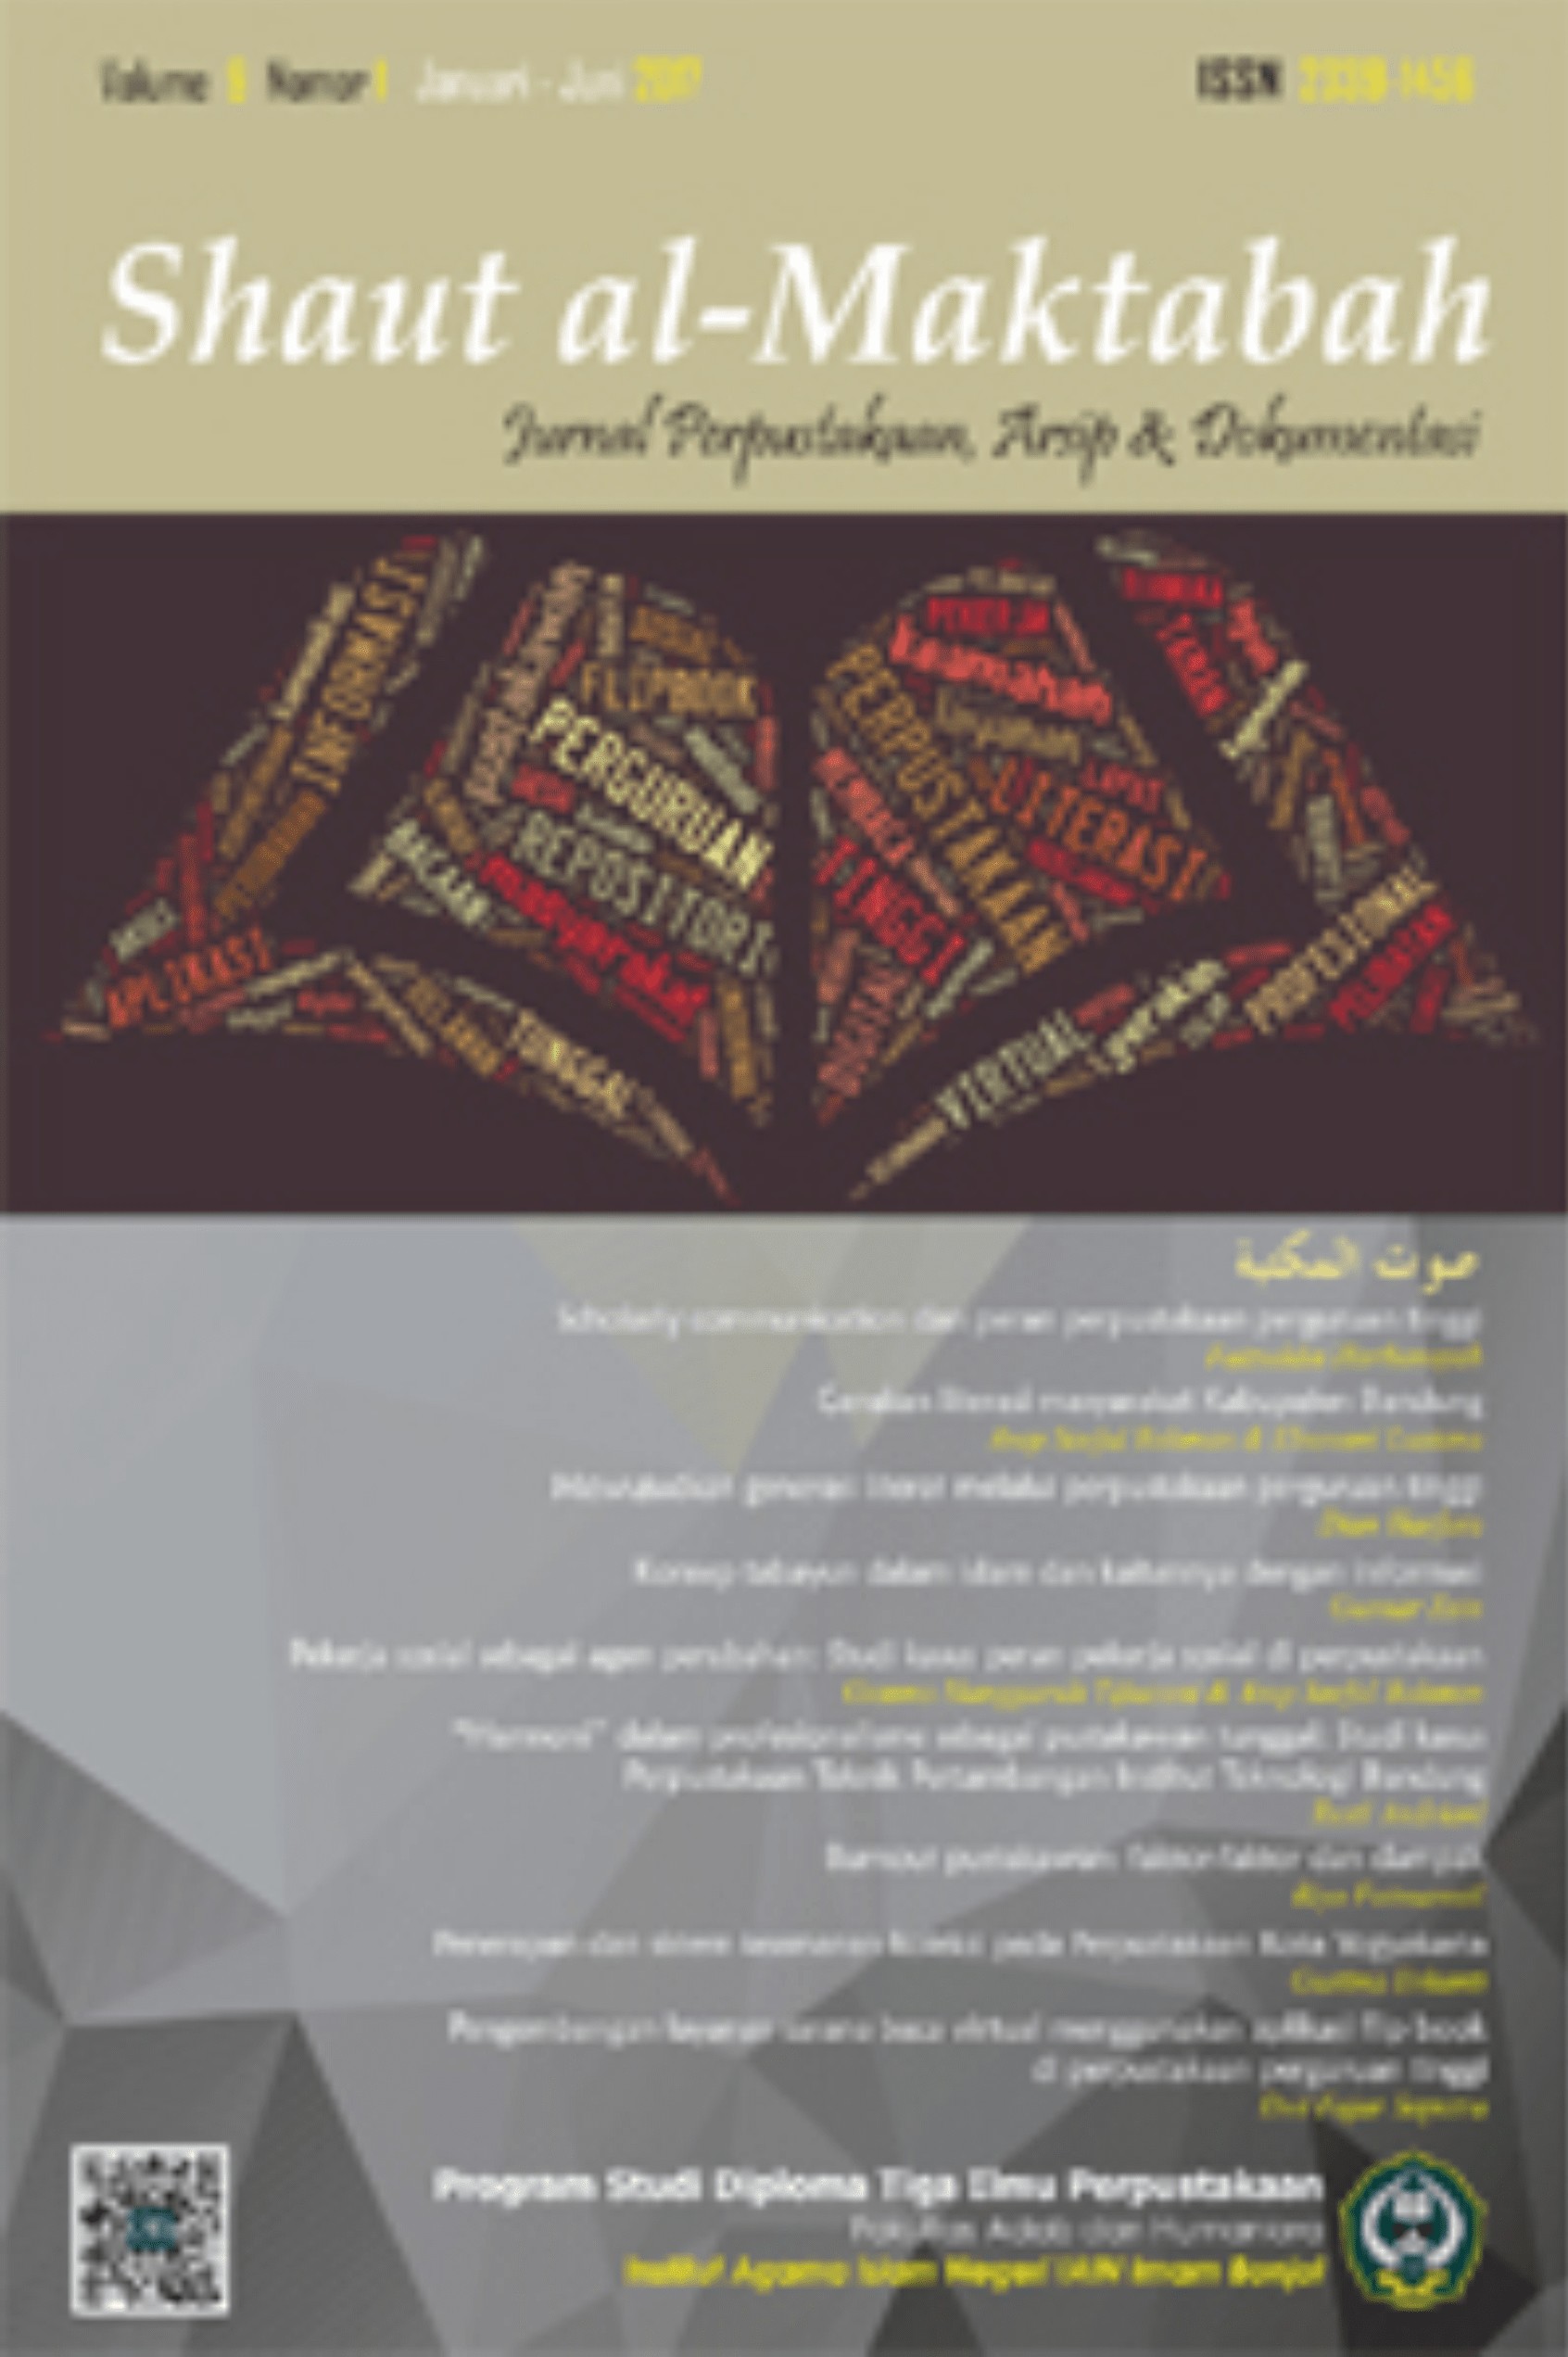 Shaut Al-Maktabah : Jurnal Perpustakaan, Arsip dan Dokumentasi adalah jurnal yang dikhususkan untuk penelitian-penelitian yang termasuk dalam bidang ilmu perpustakaan dan informasi serta bidang serumpun seperti arsip, dokumentasi dan museum ISSN: 2339-1456, e-ISSN: 2614-3801